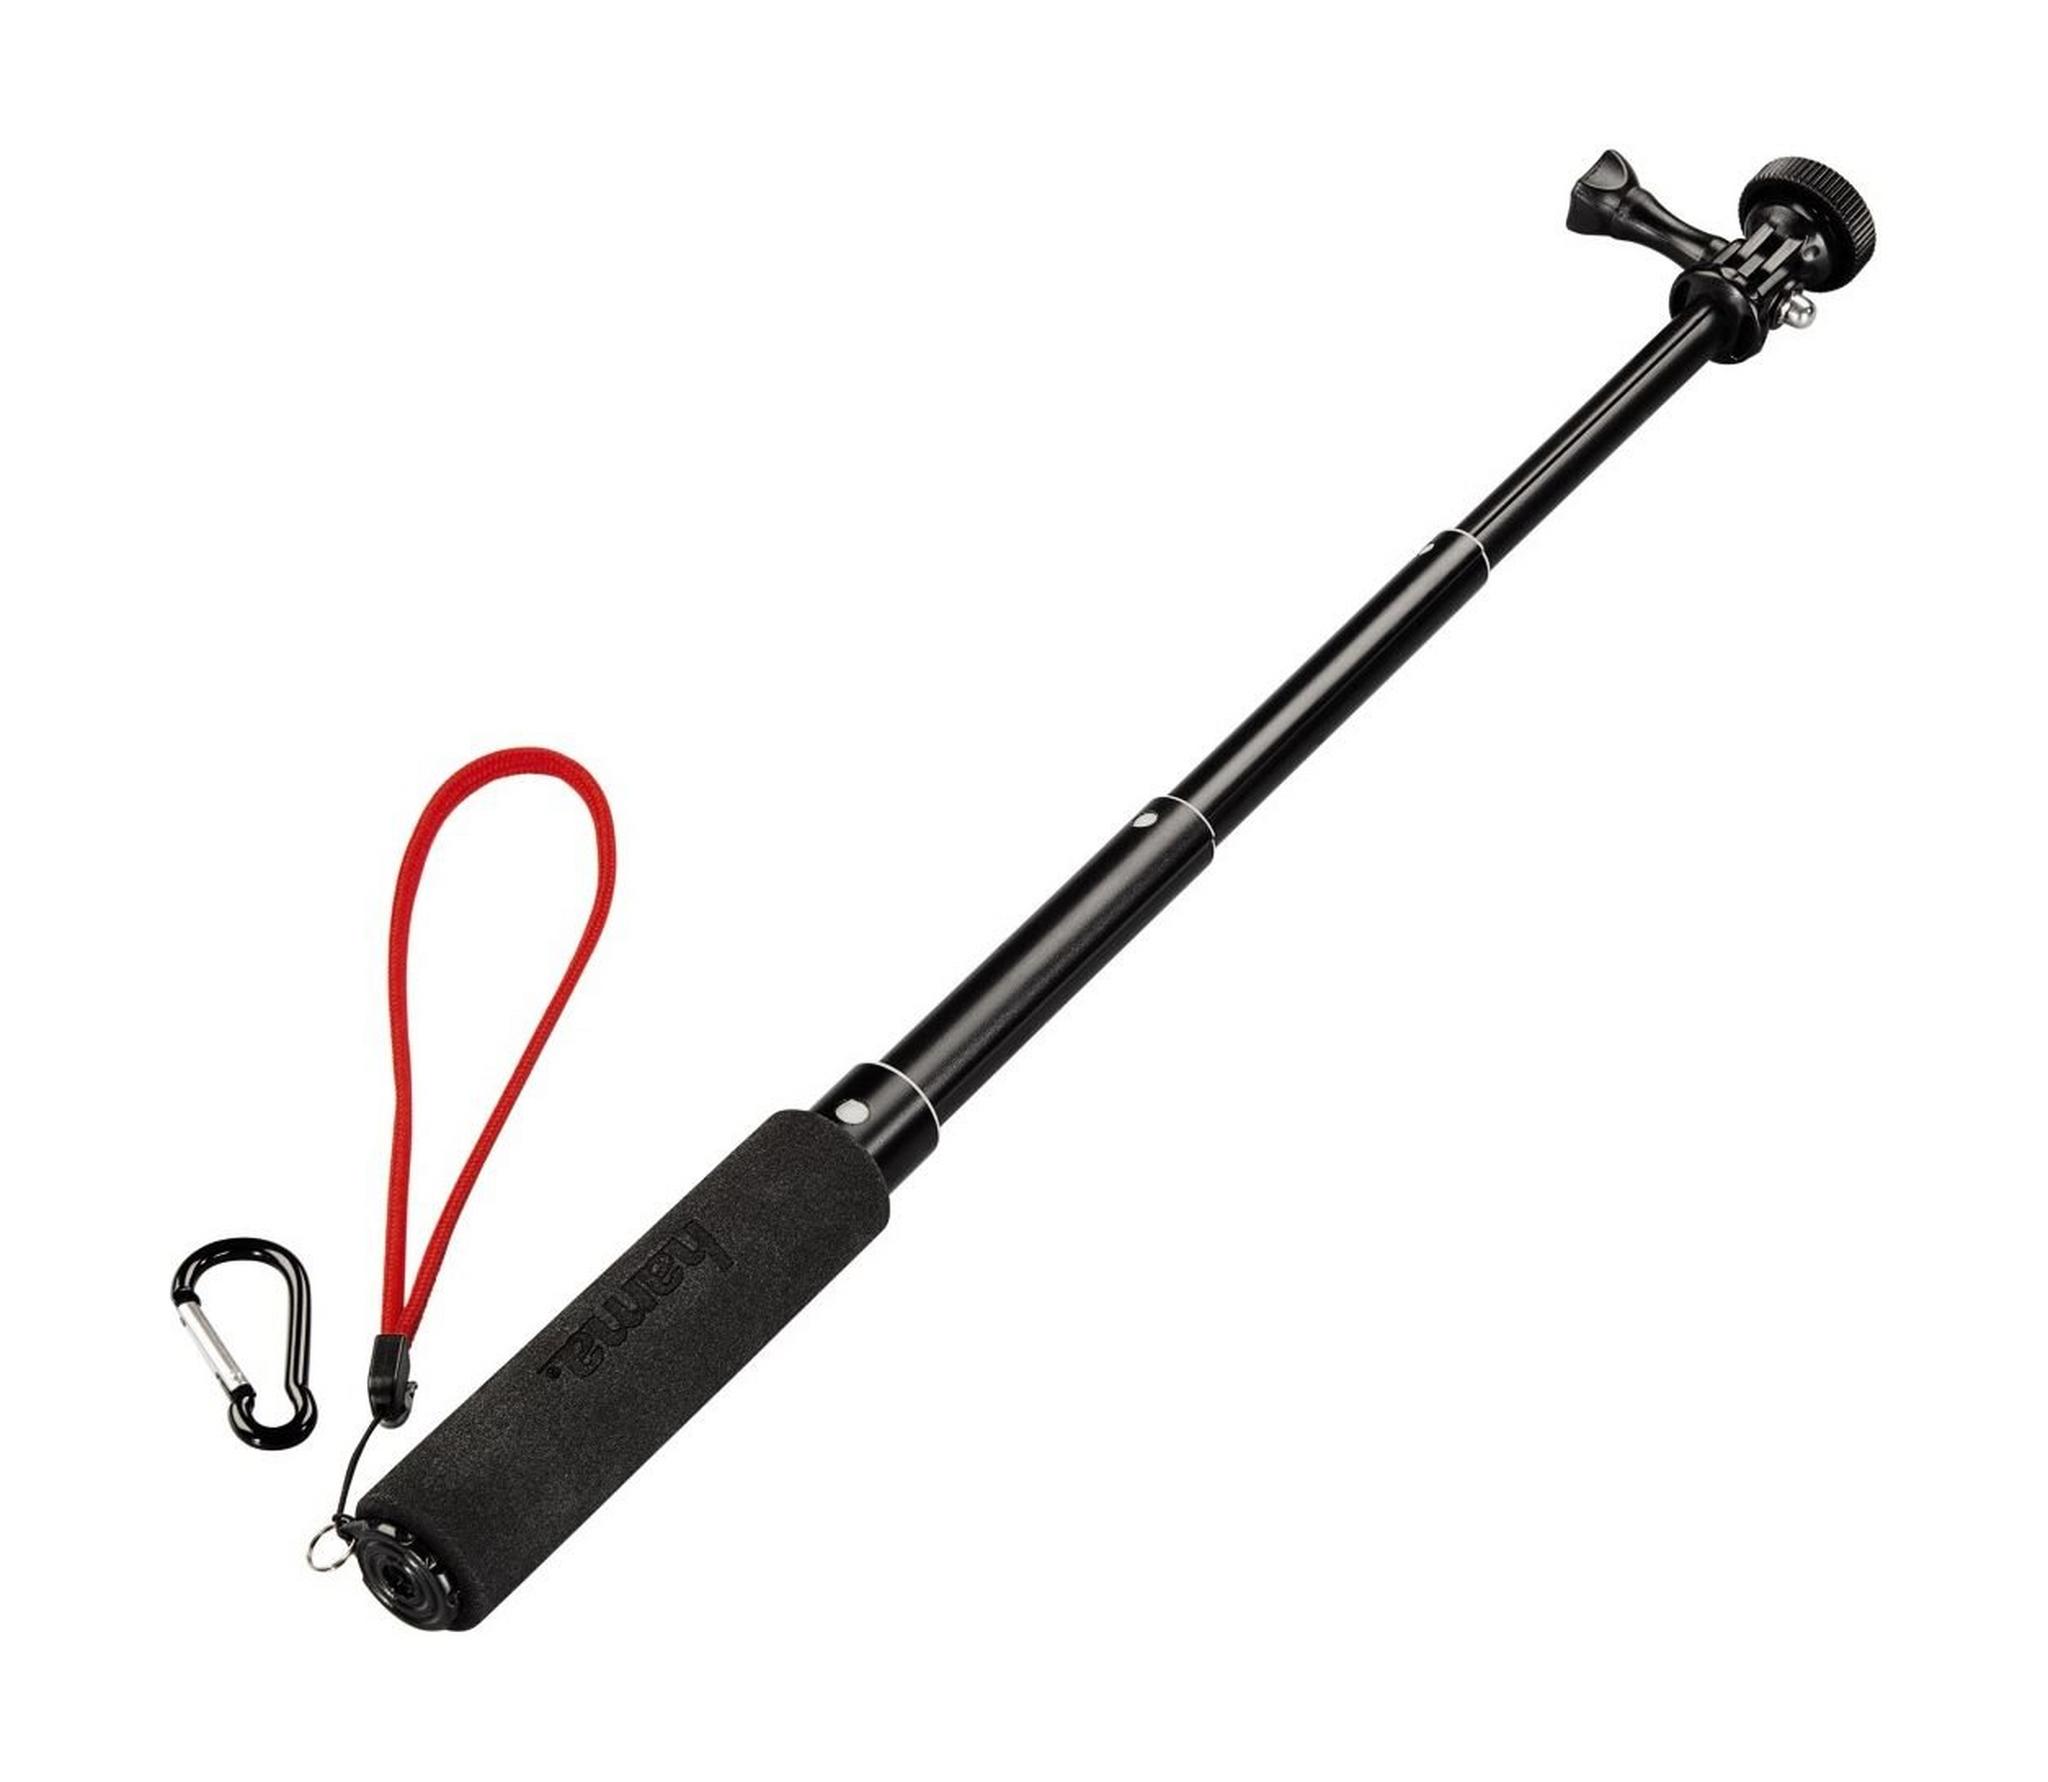 Hama Selfie 50cm Self-Monopod (4278) – Black